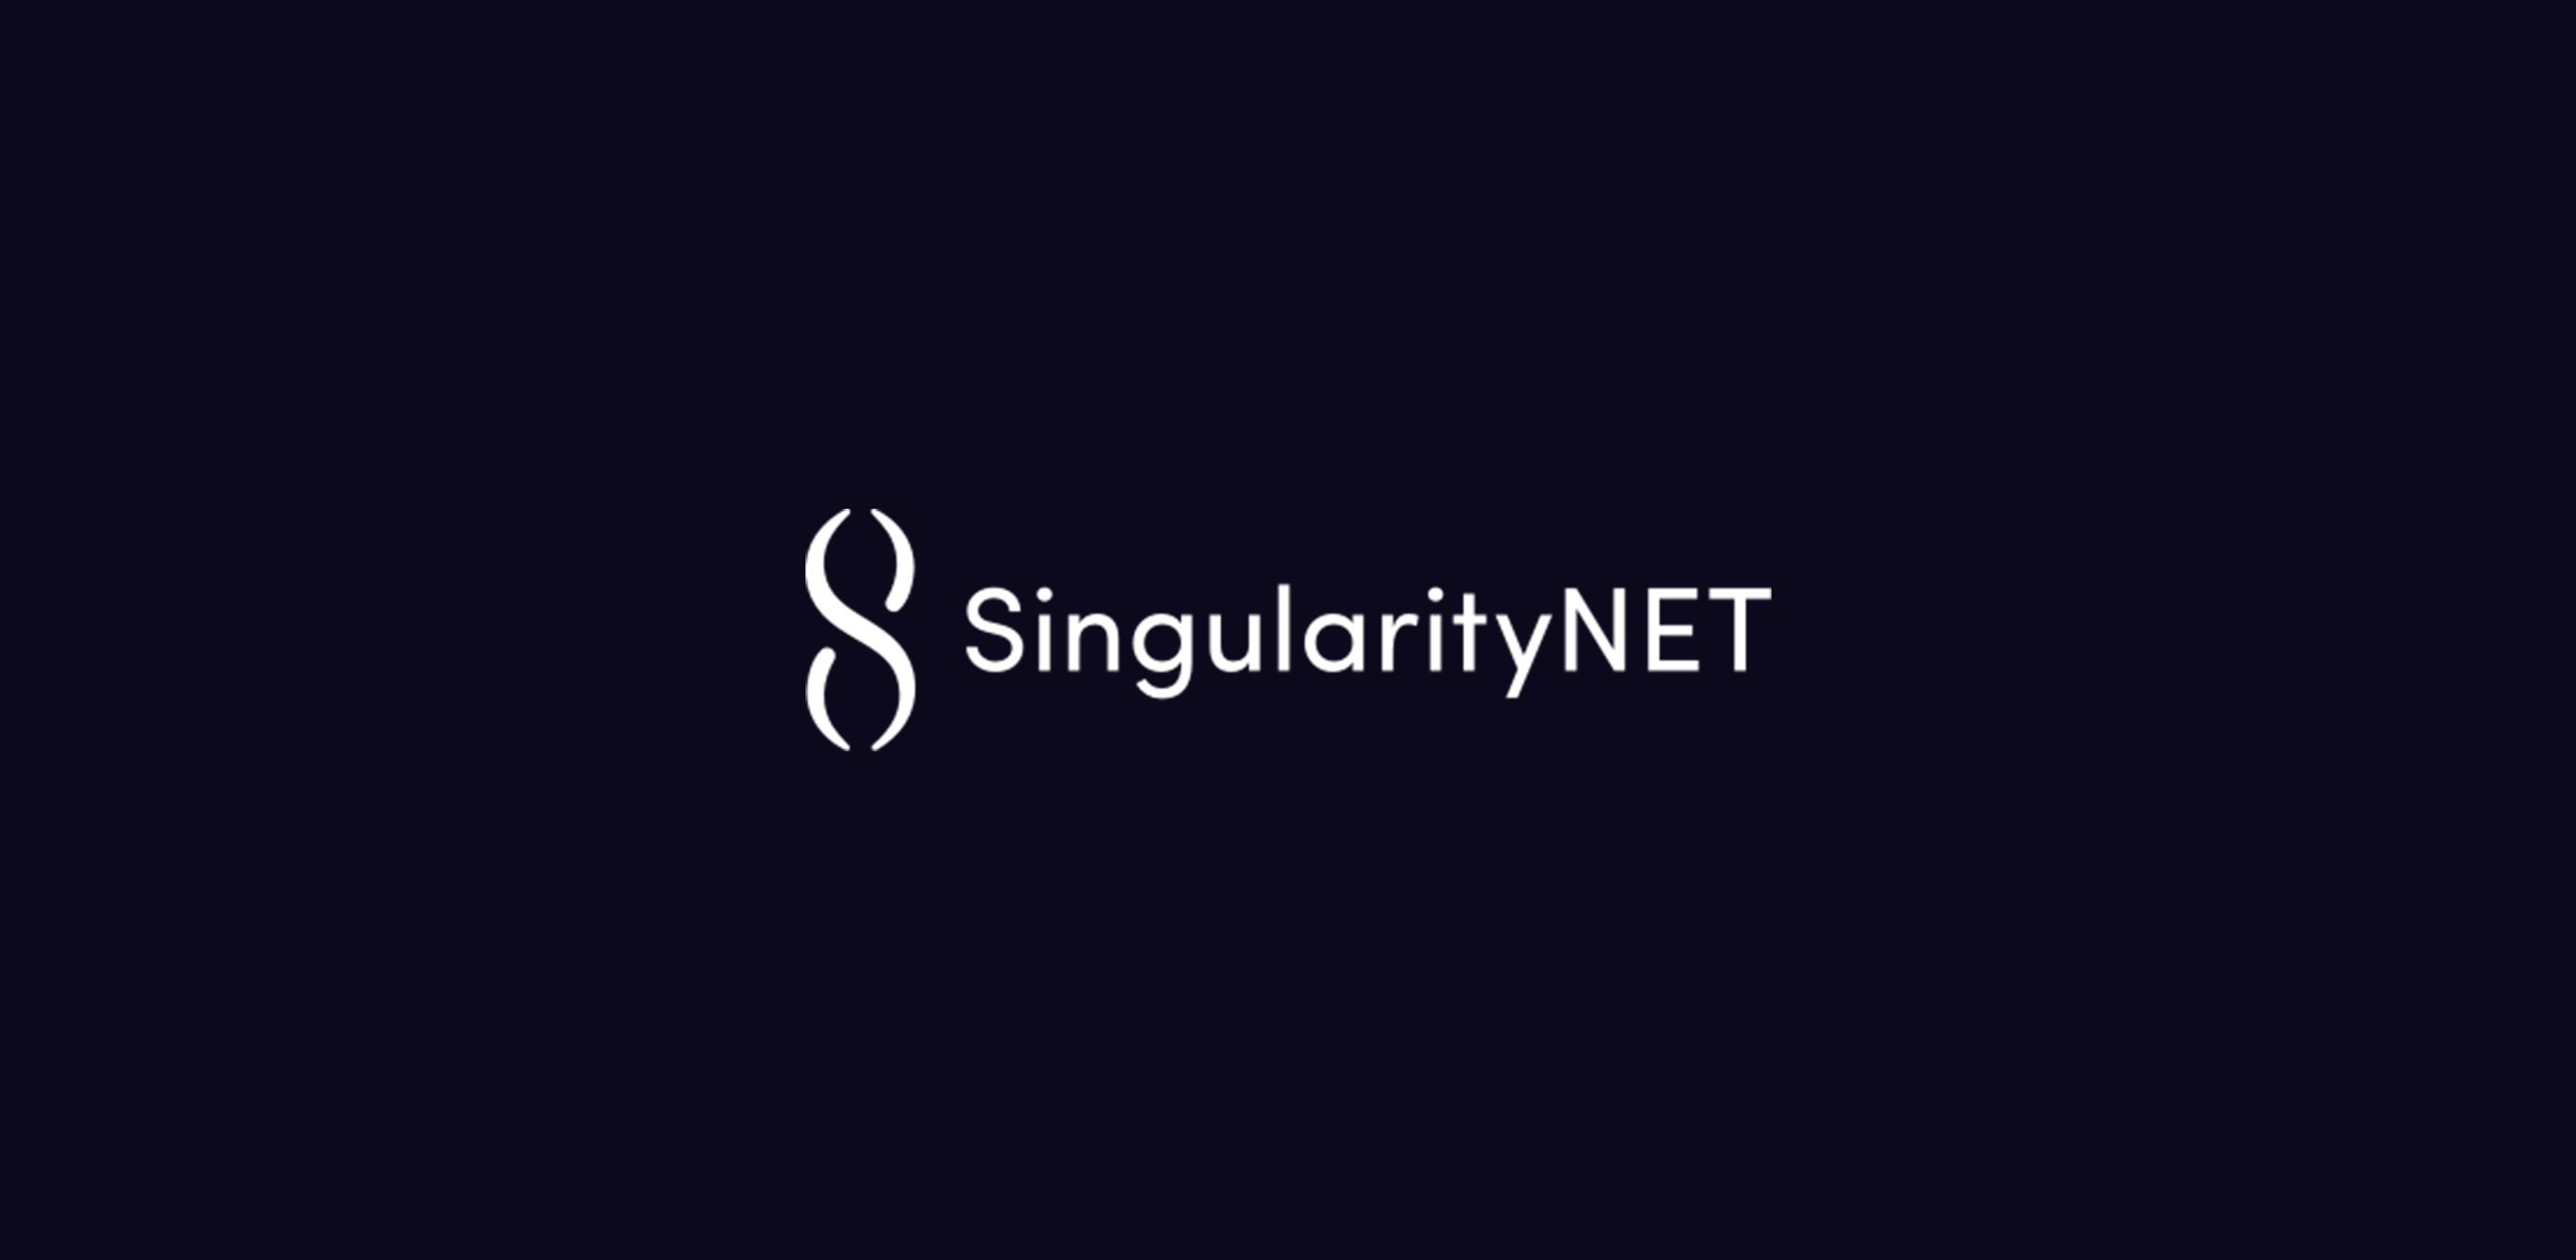 singularitynet.io